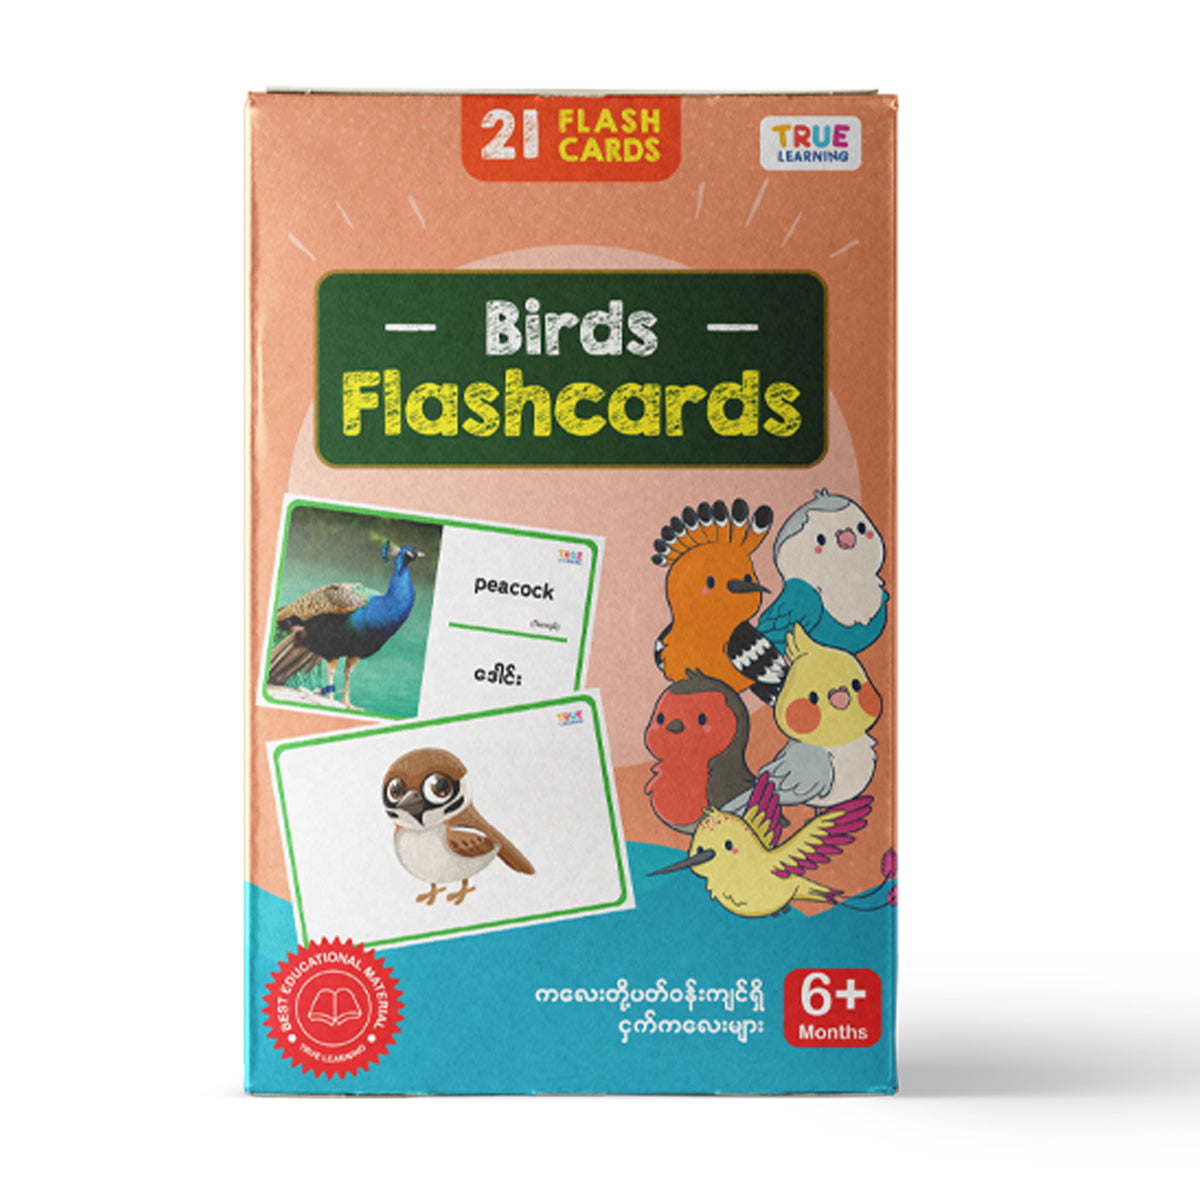 Birds Flashcards 21 cards